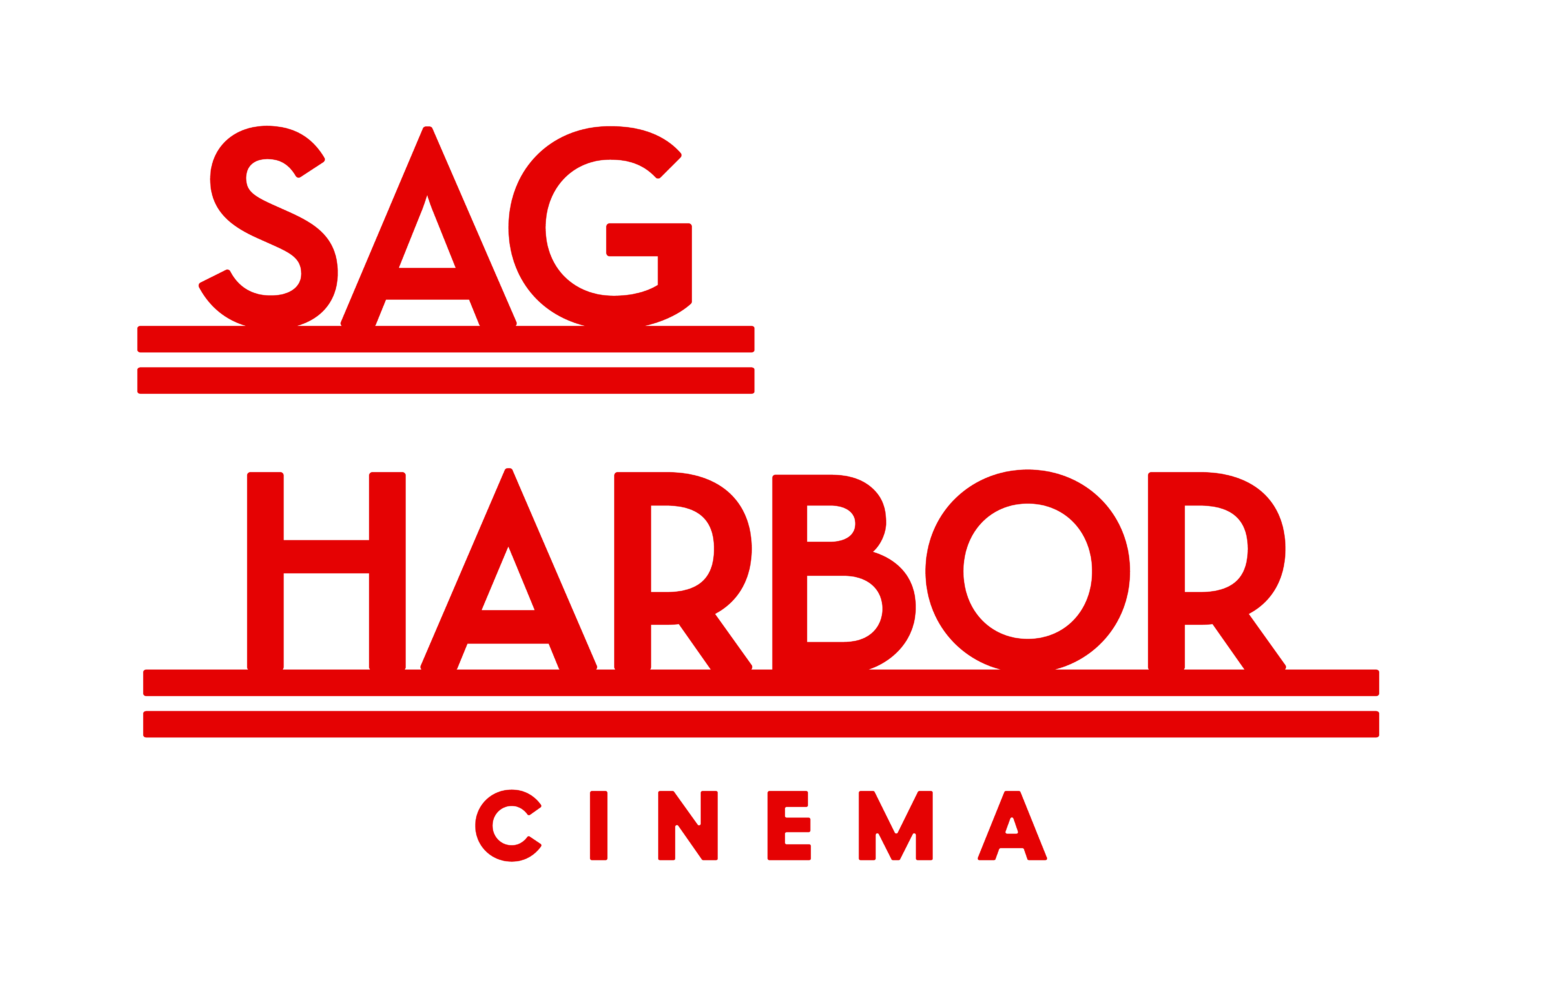 Sag Harbor Cinema "Projections" with ARF